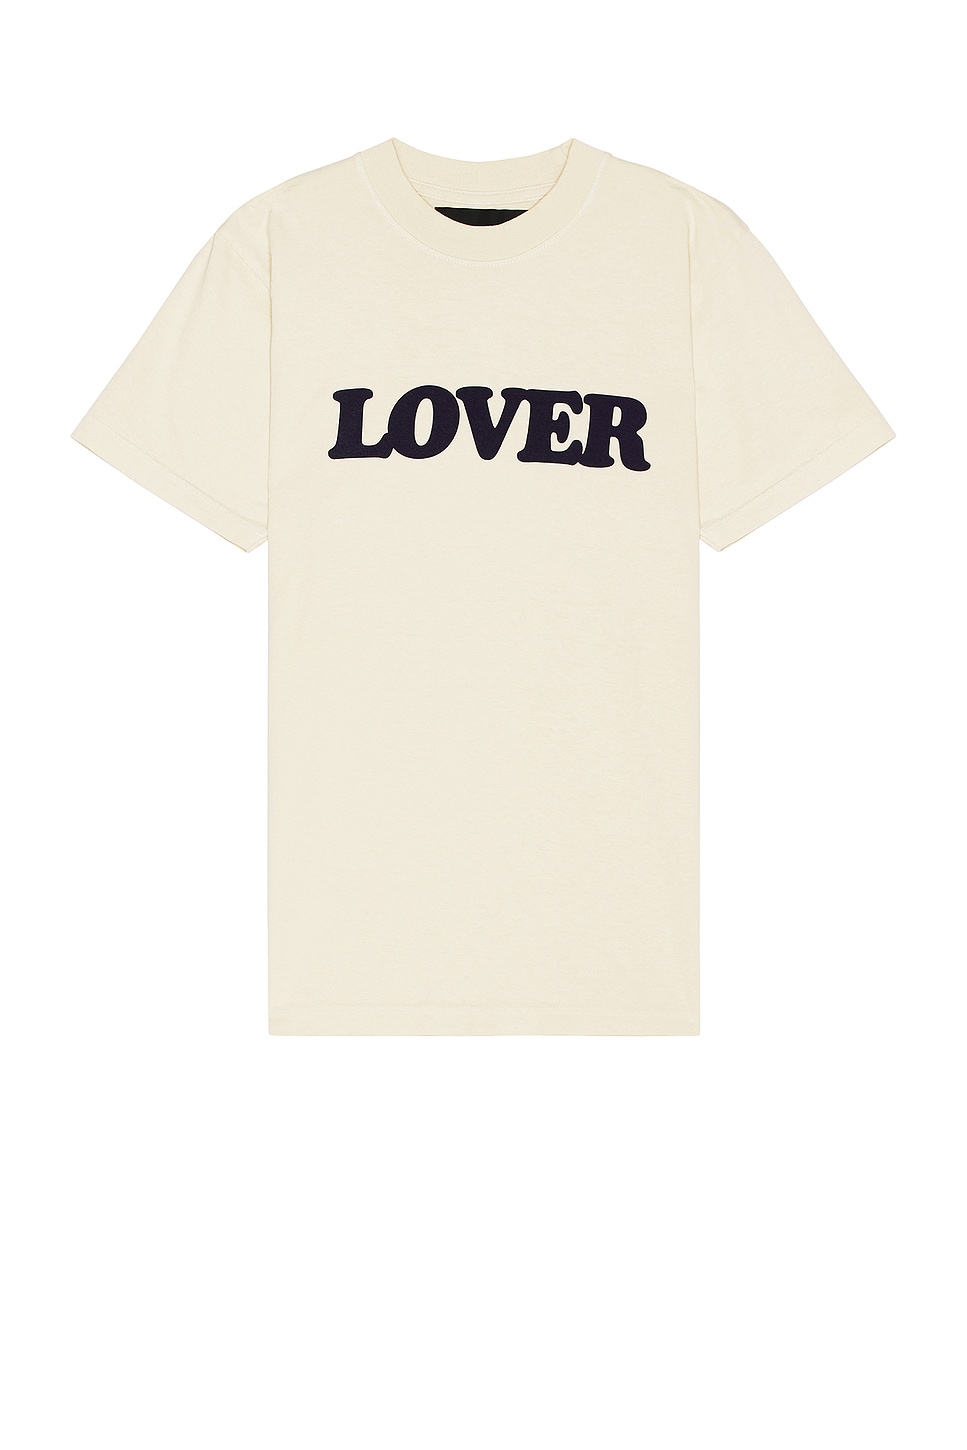 Lover Big Logo Shirt in Beige